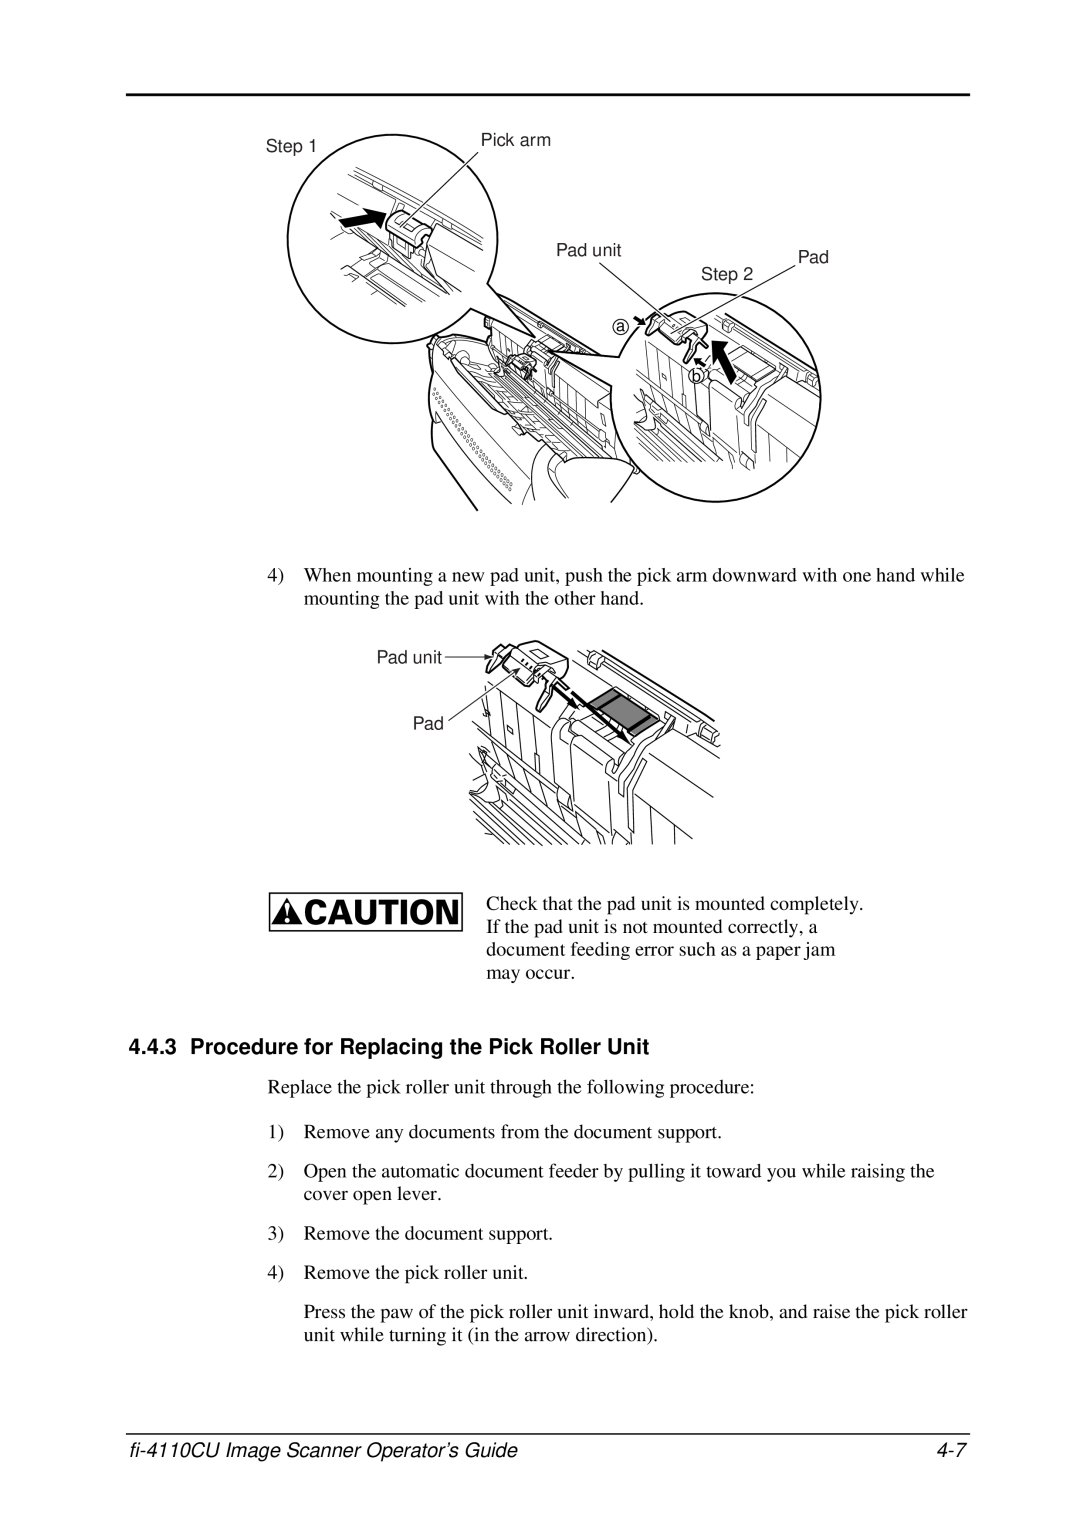 Fujitsu C150-E194-01EN manual Procedure for Replacing the Pick Roller Unit, fi-4110CU Image Scanner Operator’s Guide 